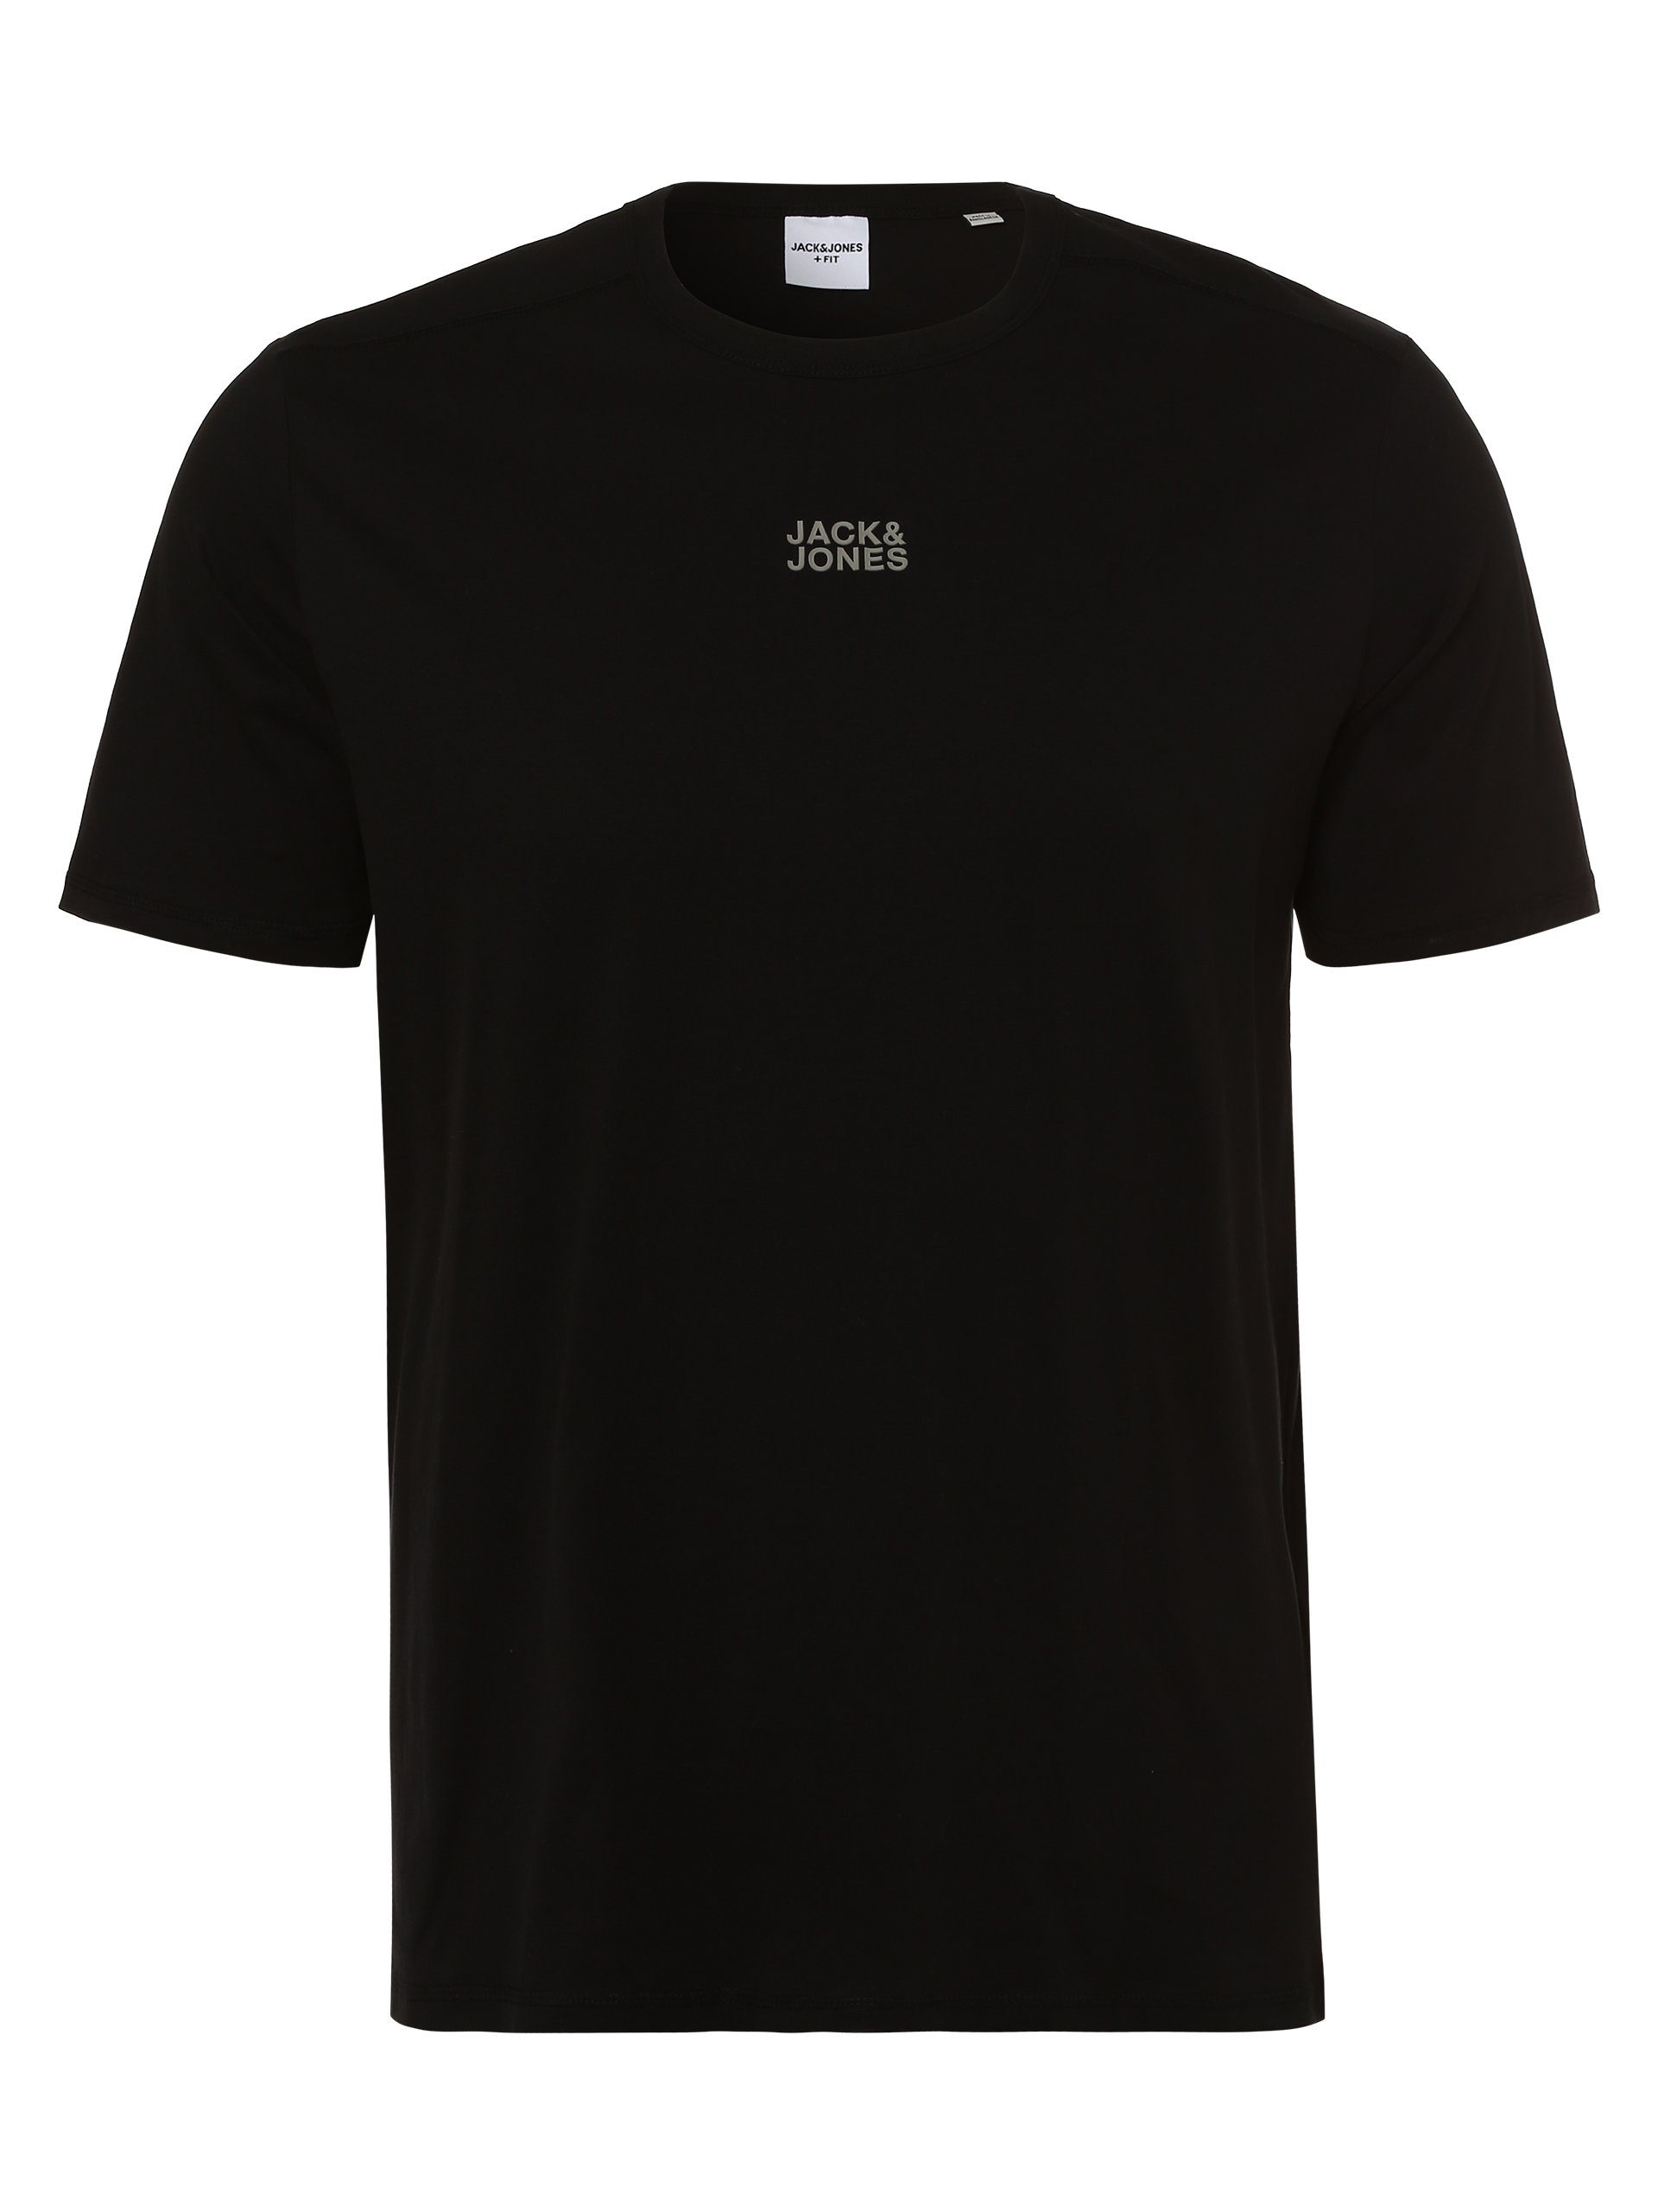 Jack & JCOClassic Jones T-Shirt schwarz